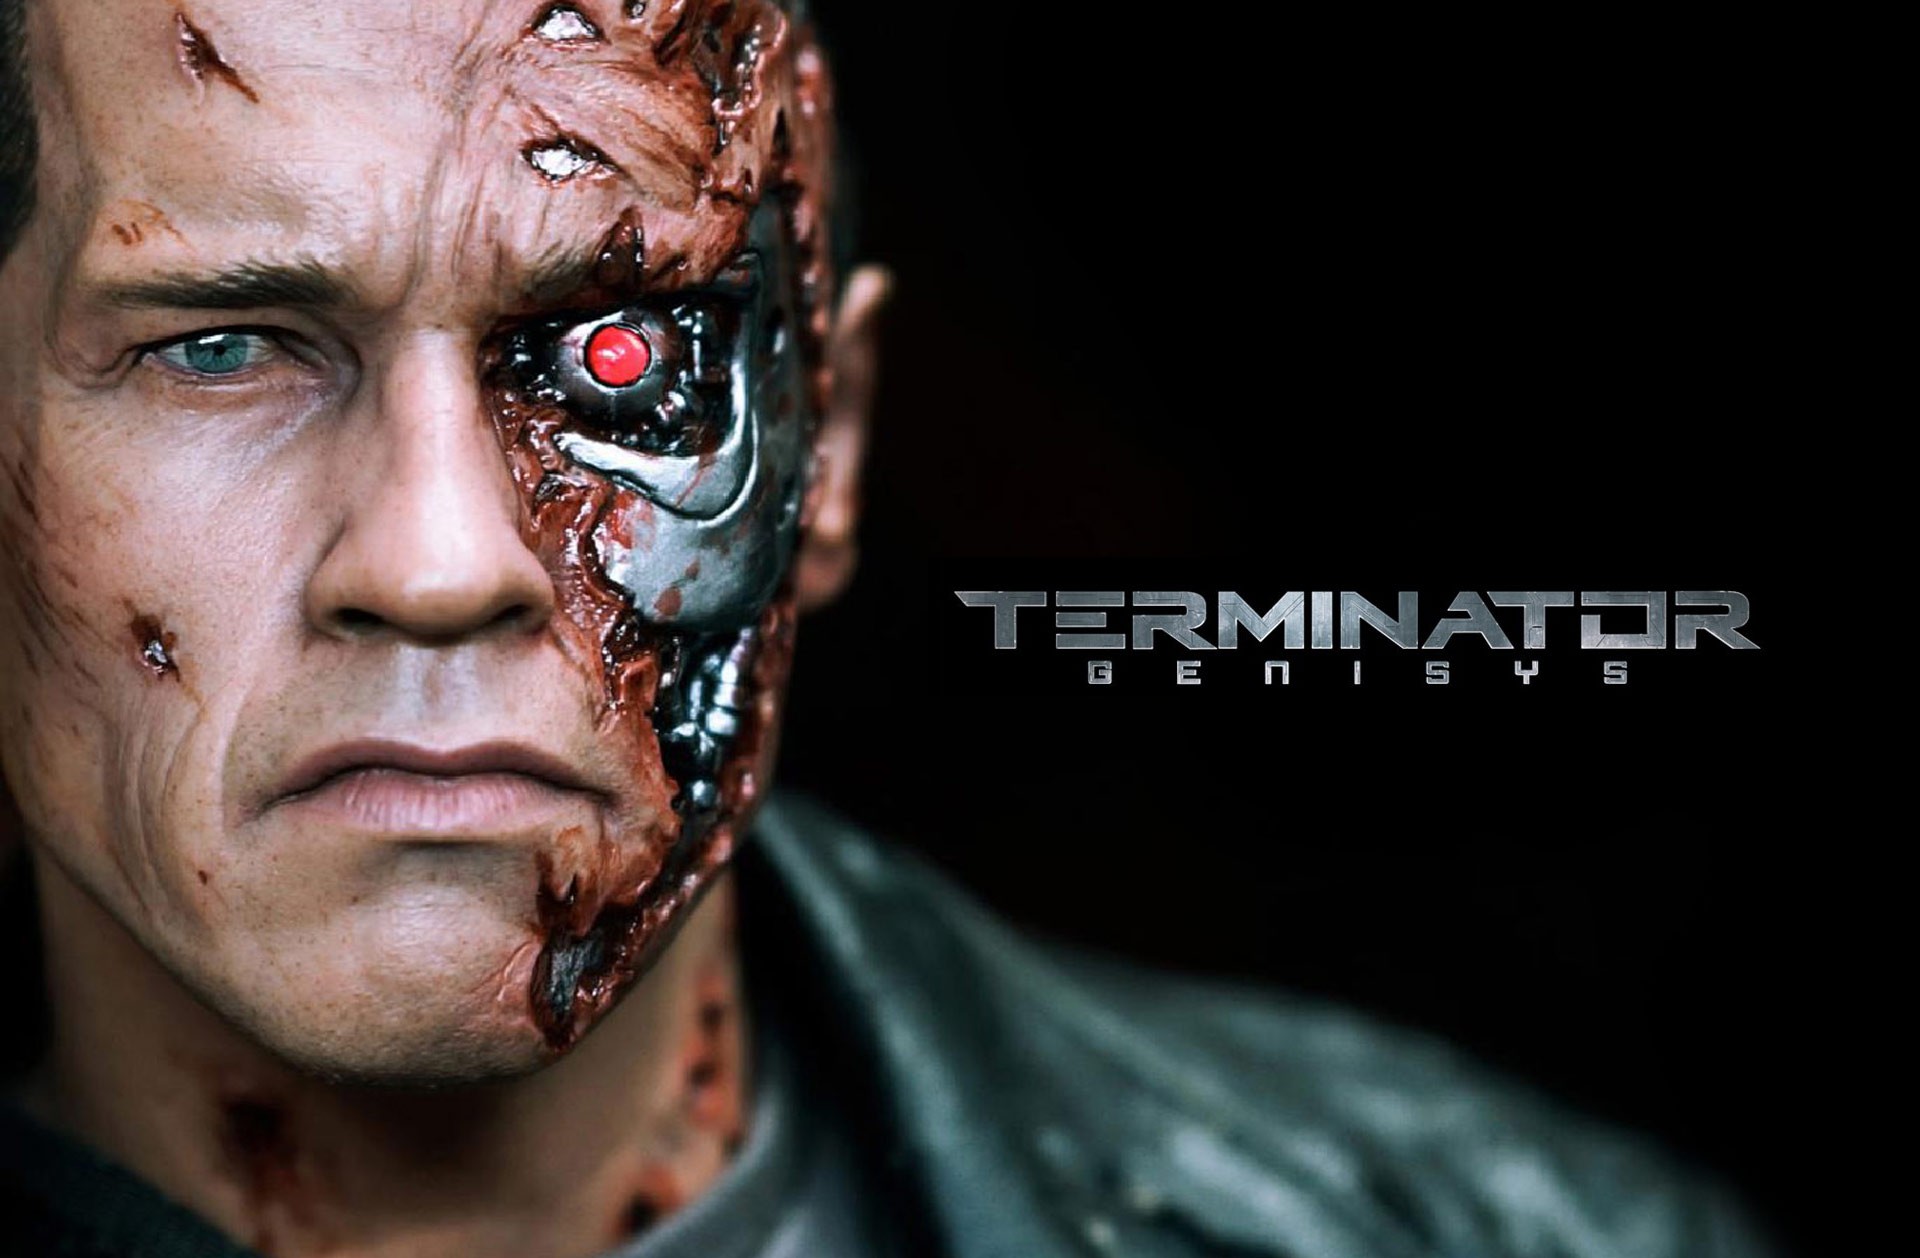 The Terminator #5